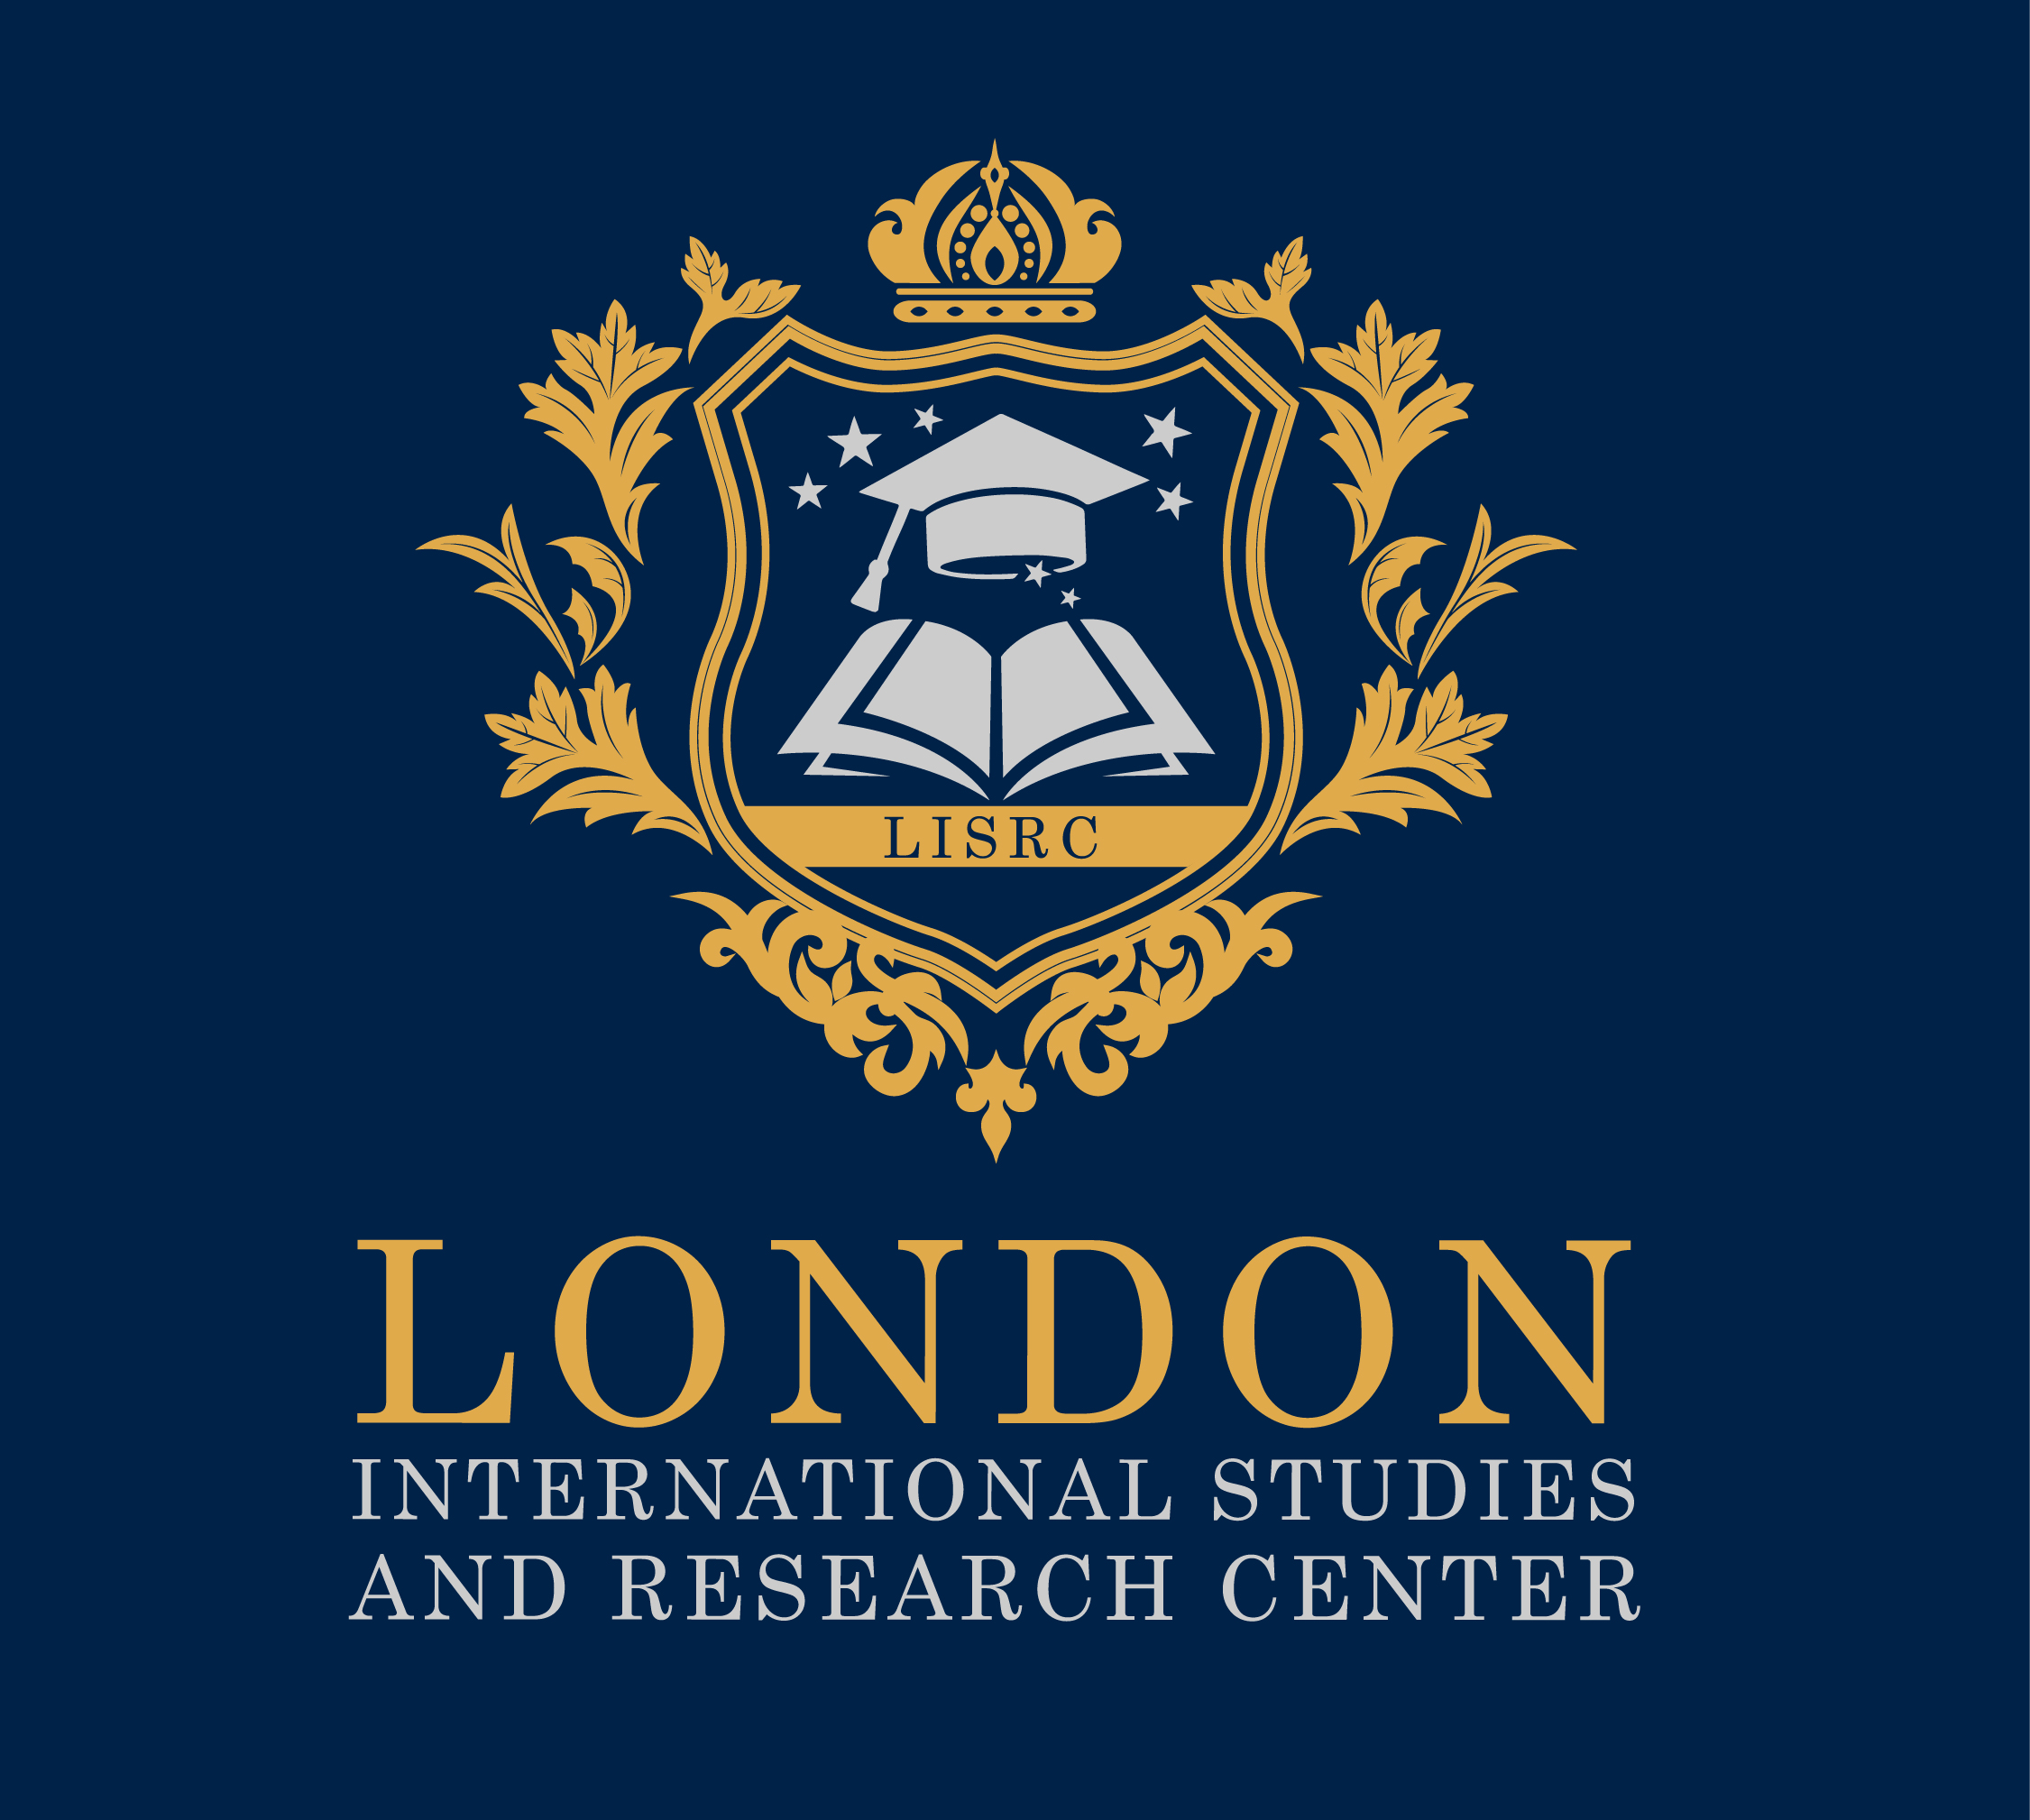 More about London International Studies